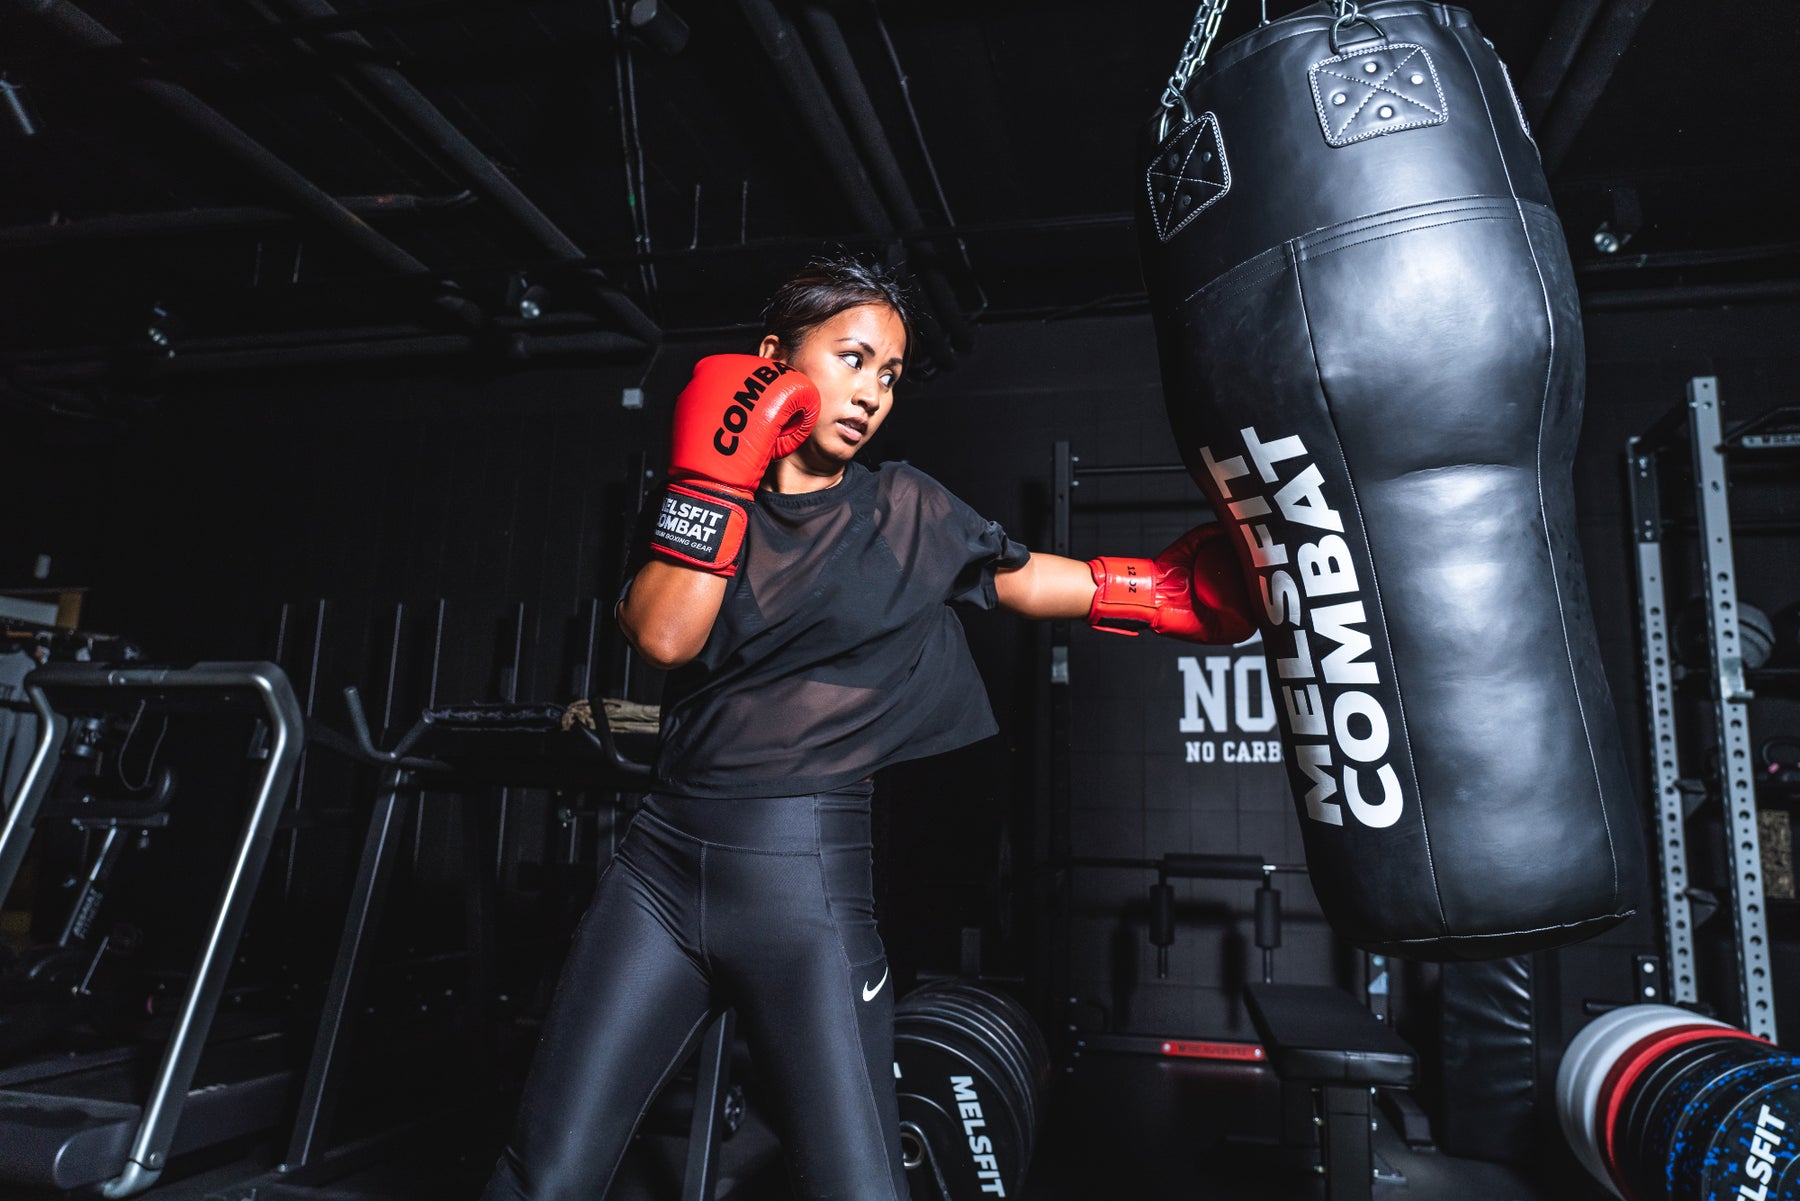 Gants Nike ultimate fitness - Gants & Protections - Sports de combat